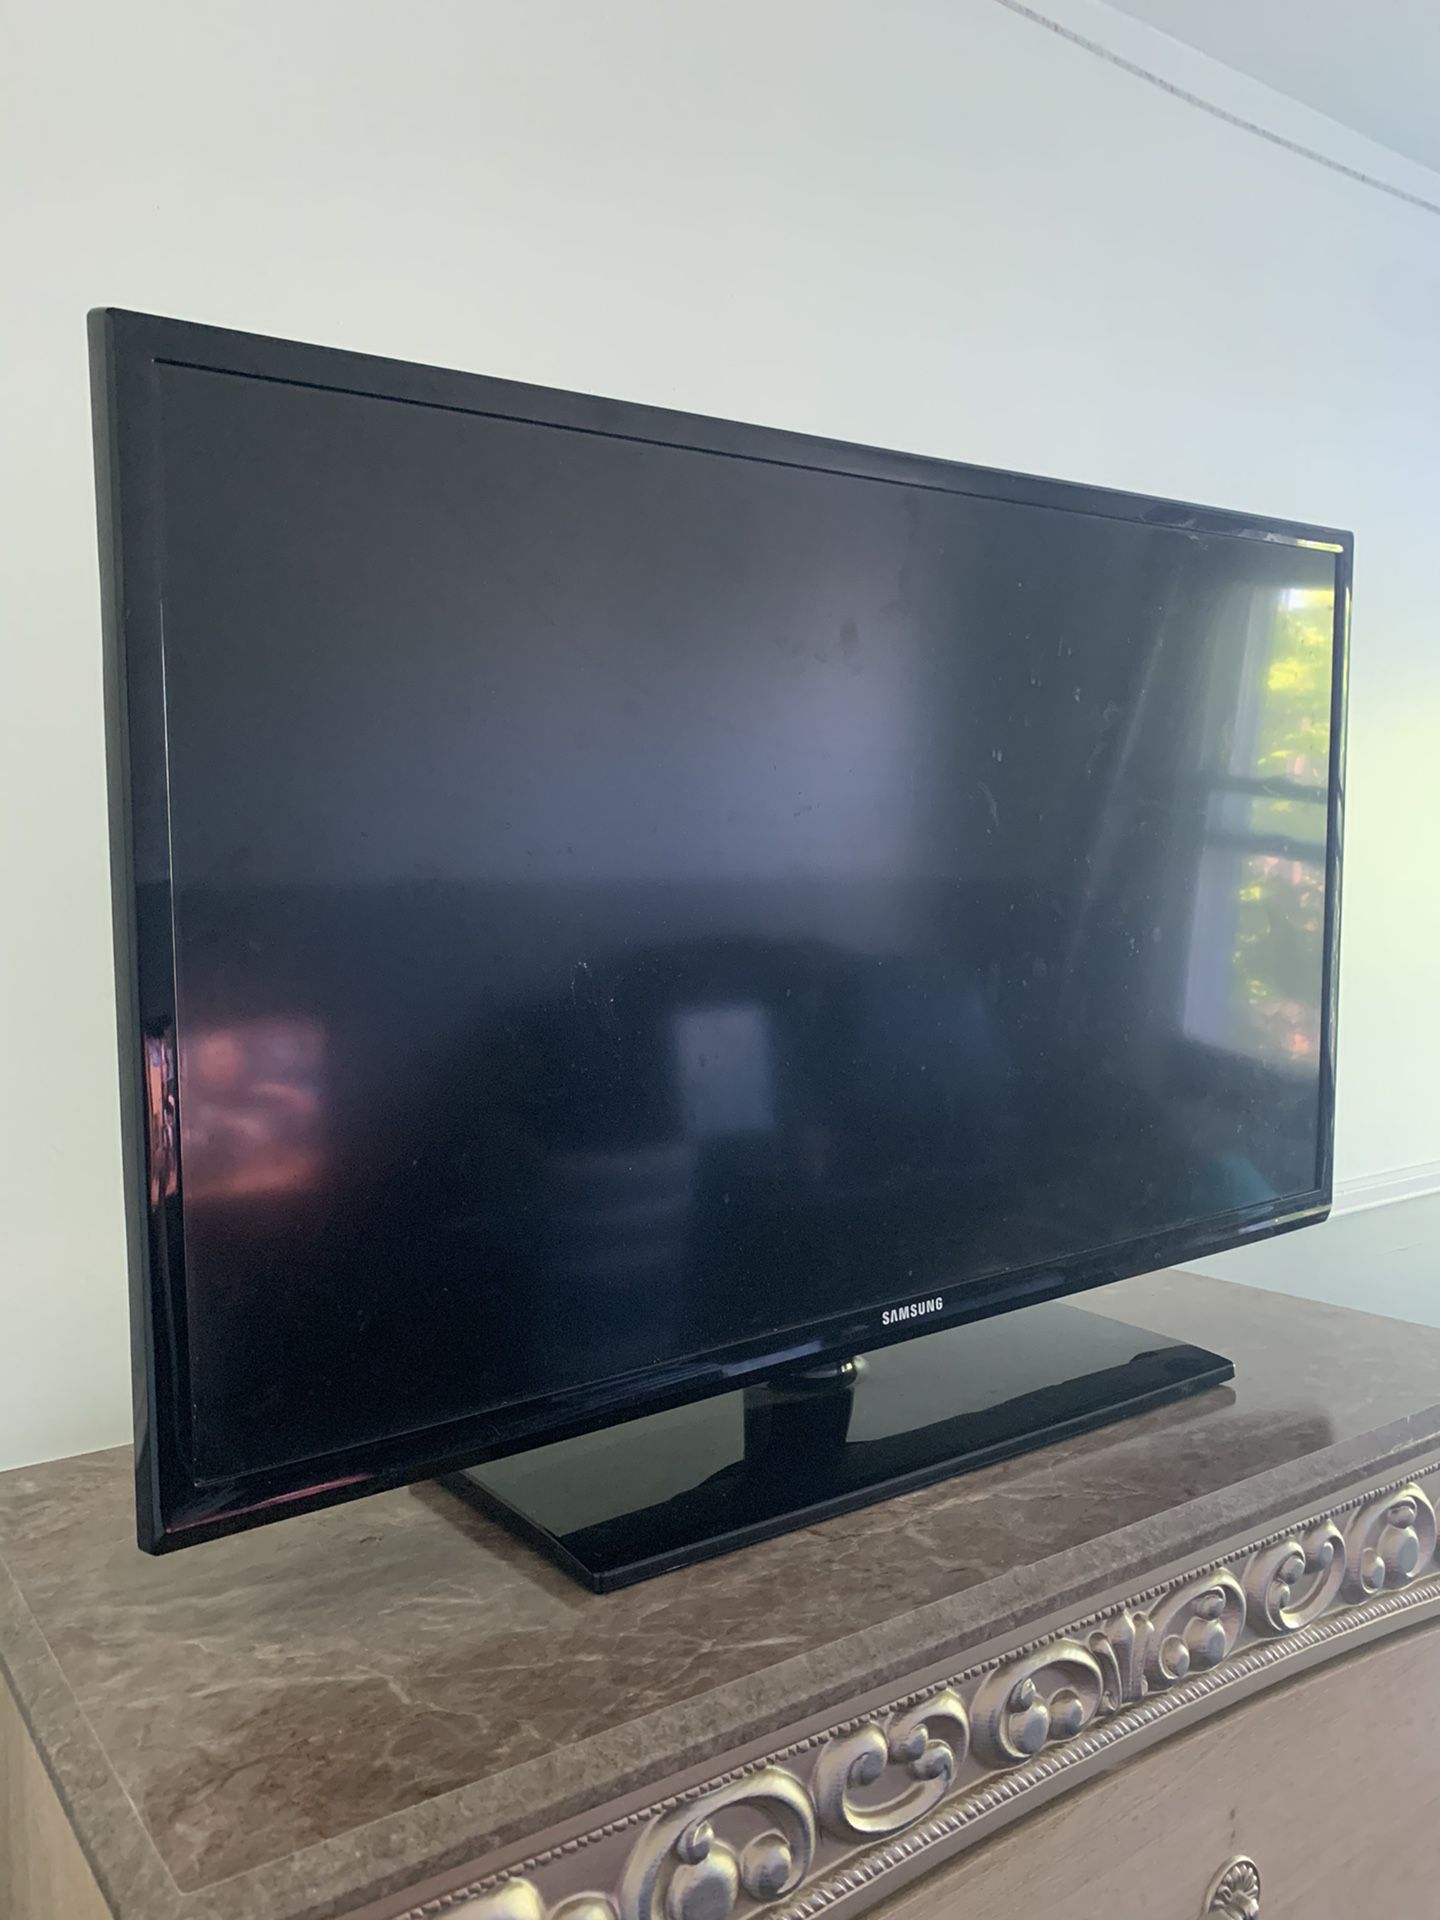 Samsung 32” TV!